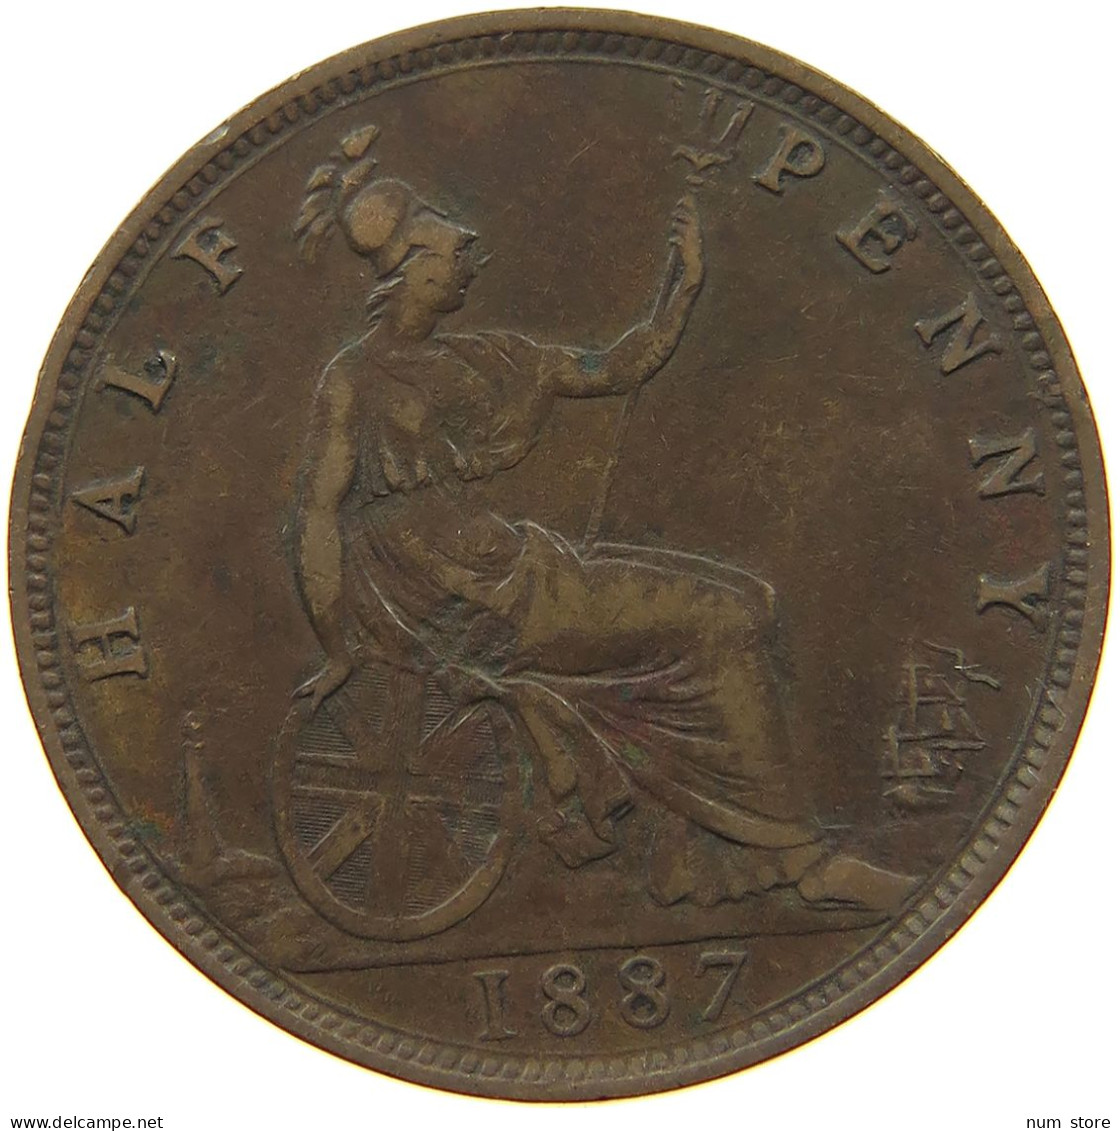 GREAT BRITAIN HALFPENNY 1887 Victoria 1837-1901 #a011 0379 - C. 1/2 Penny